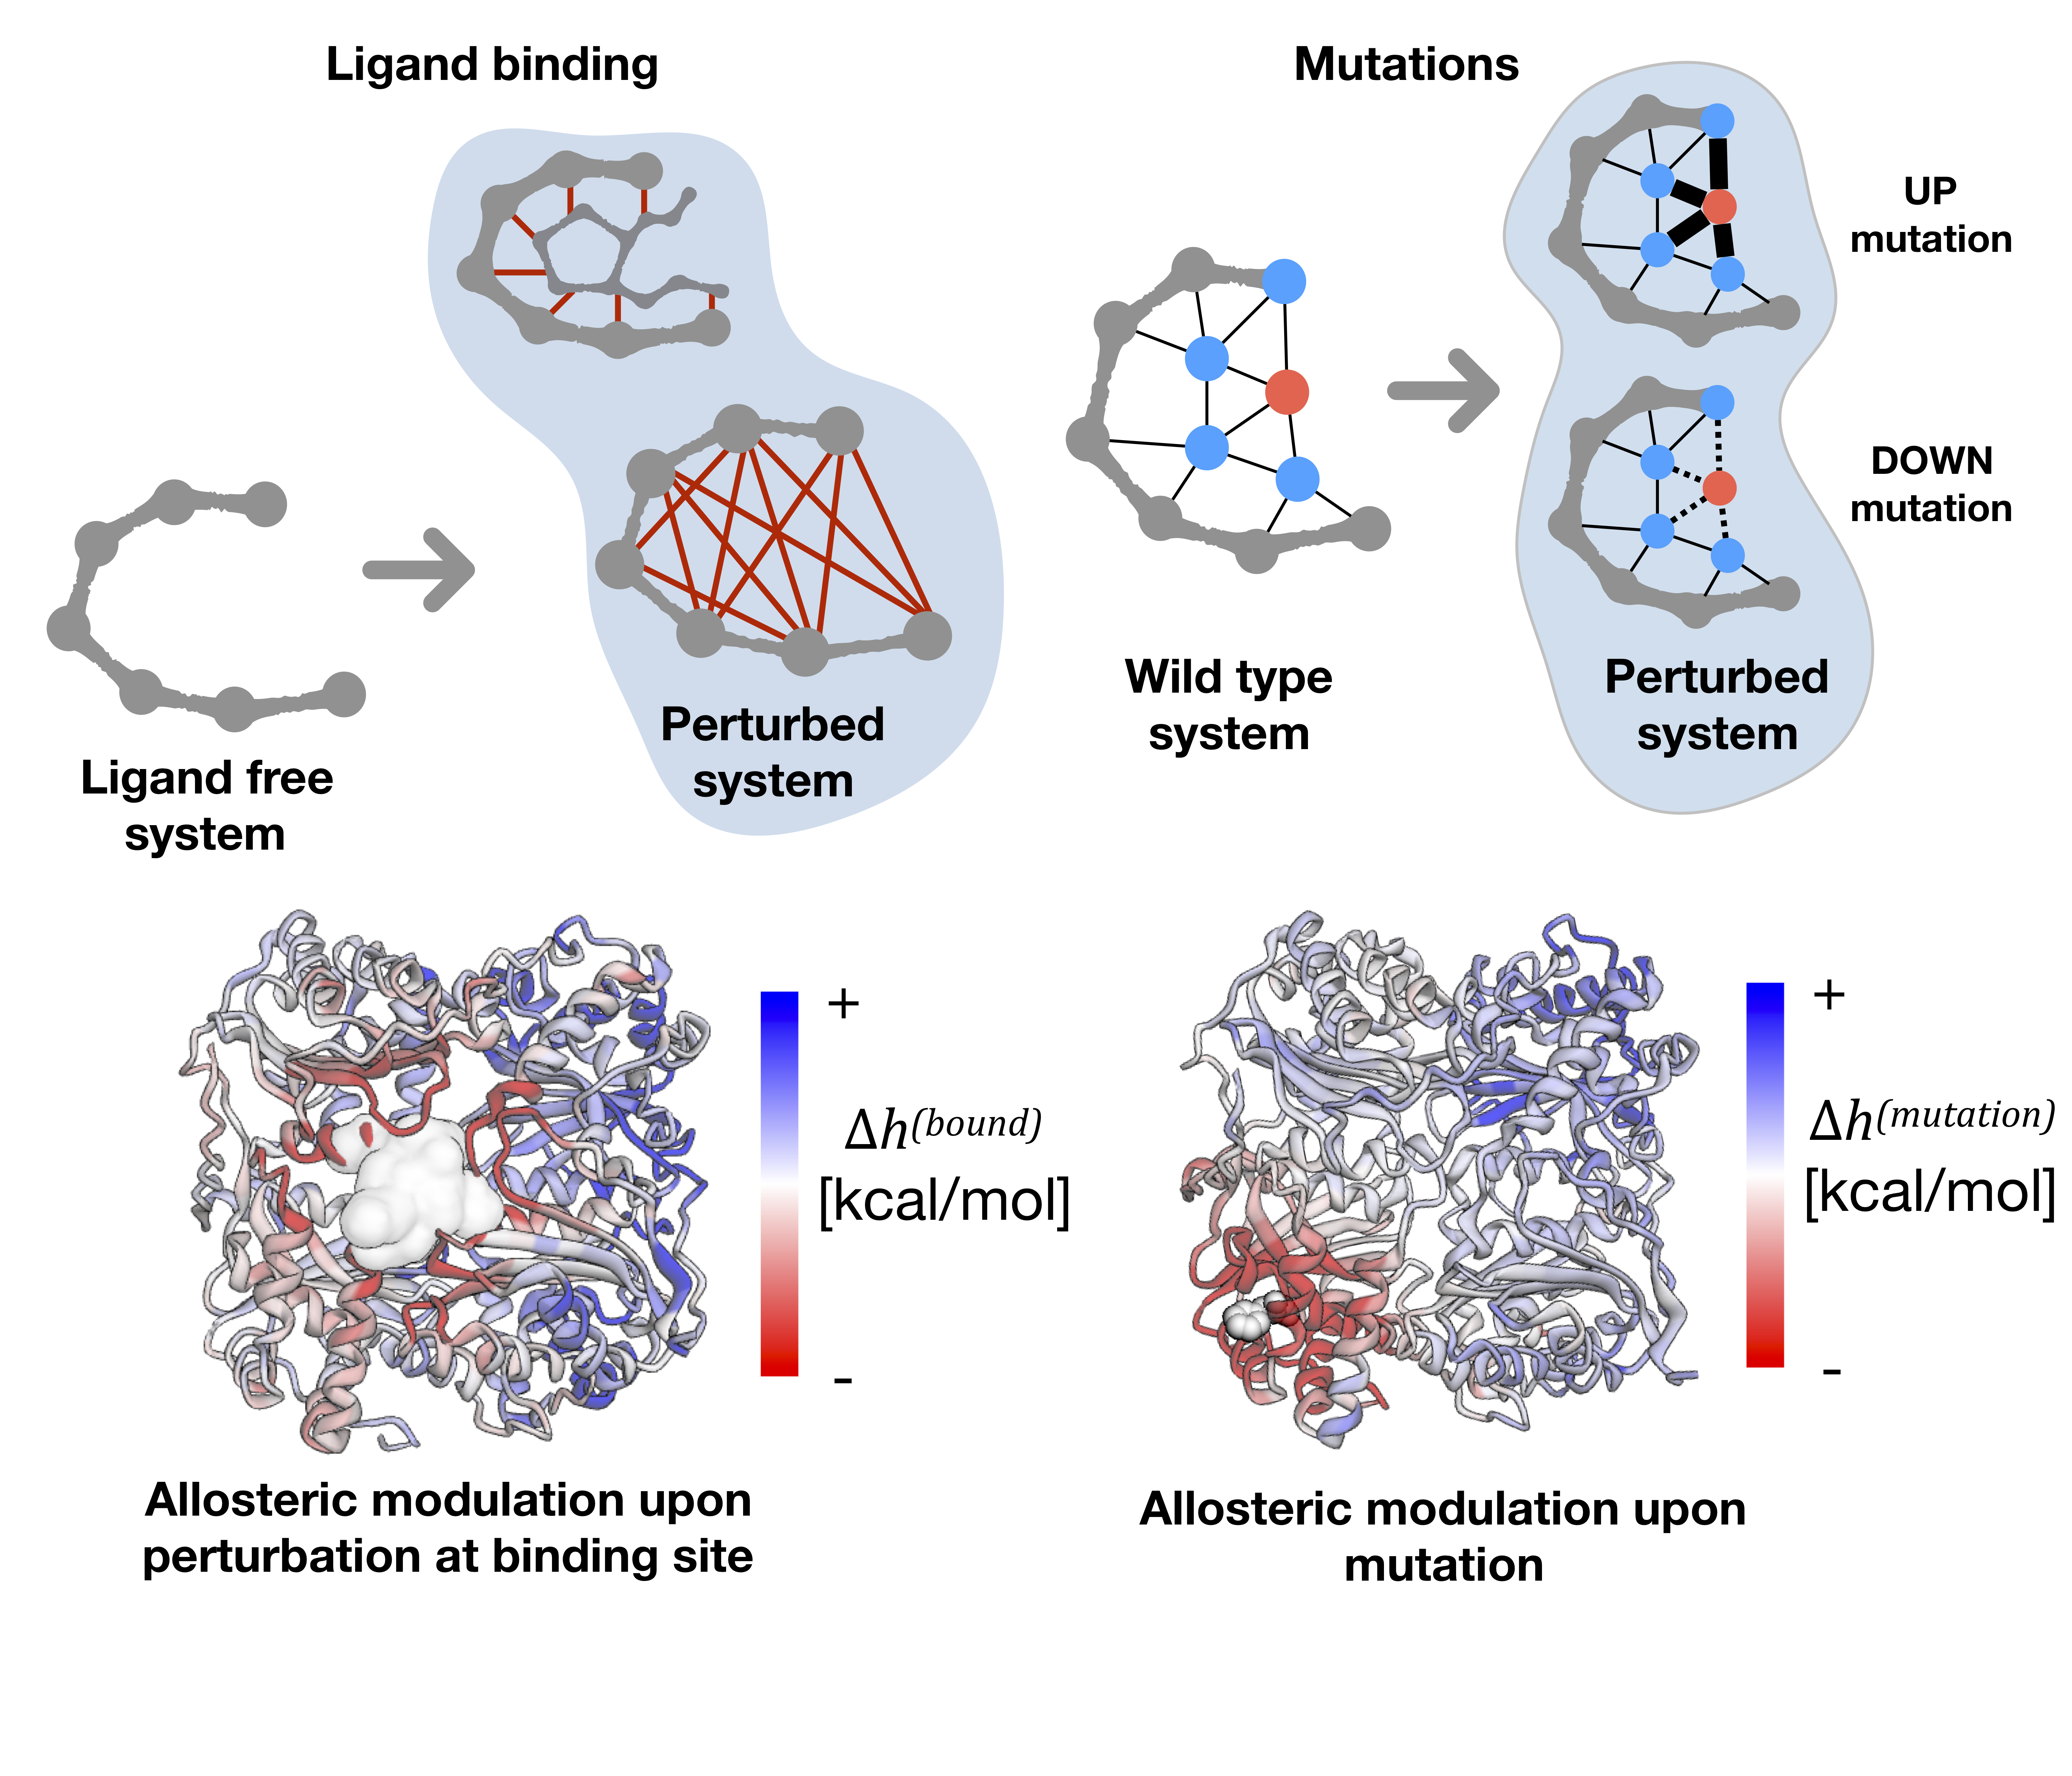 Ligand binding and mutations